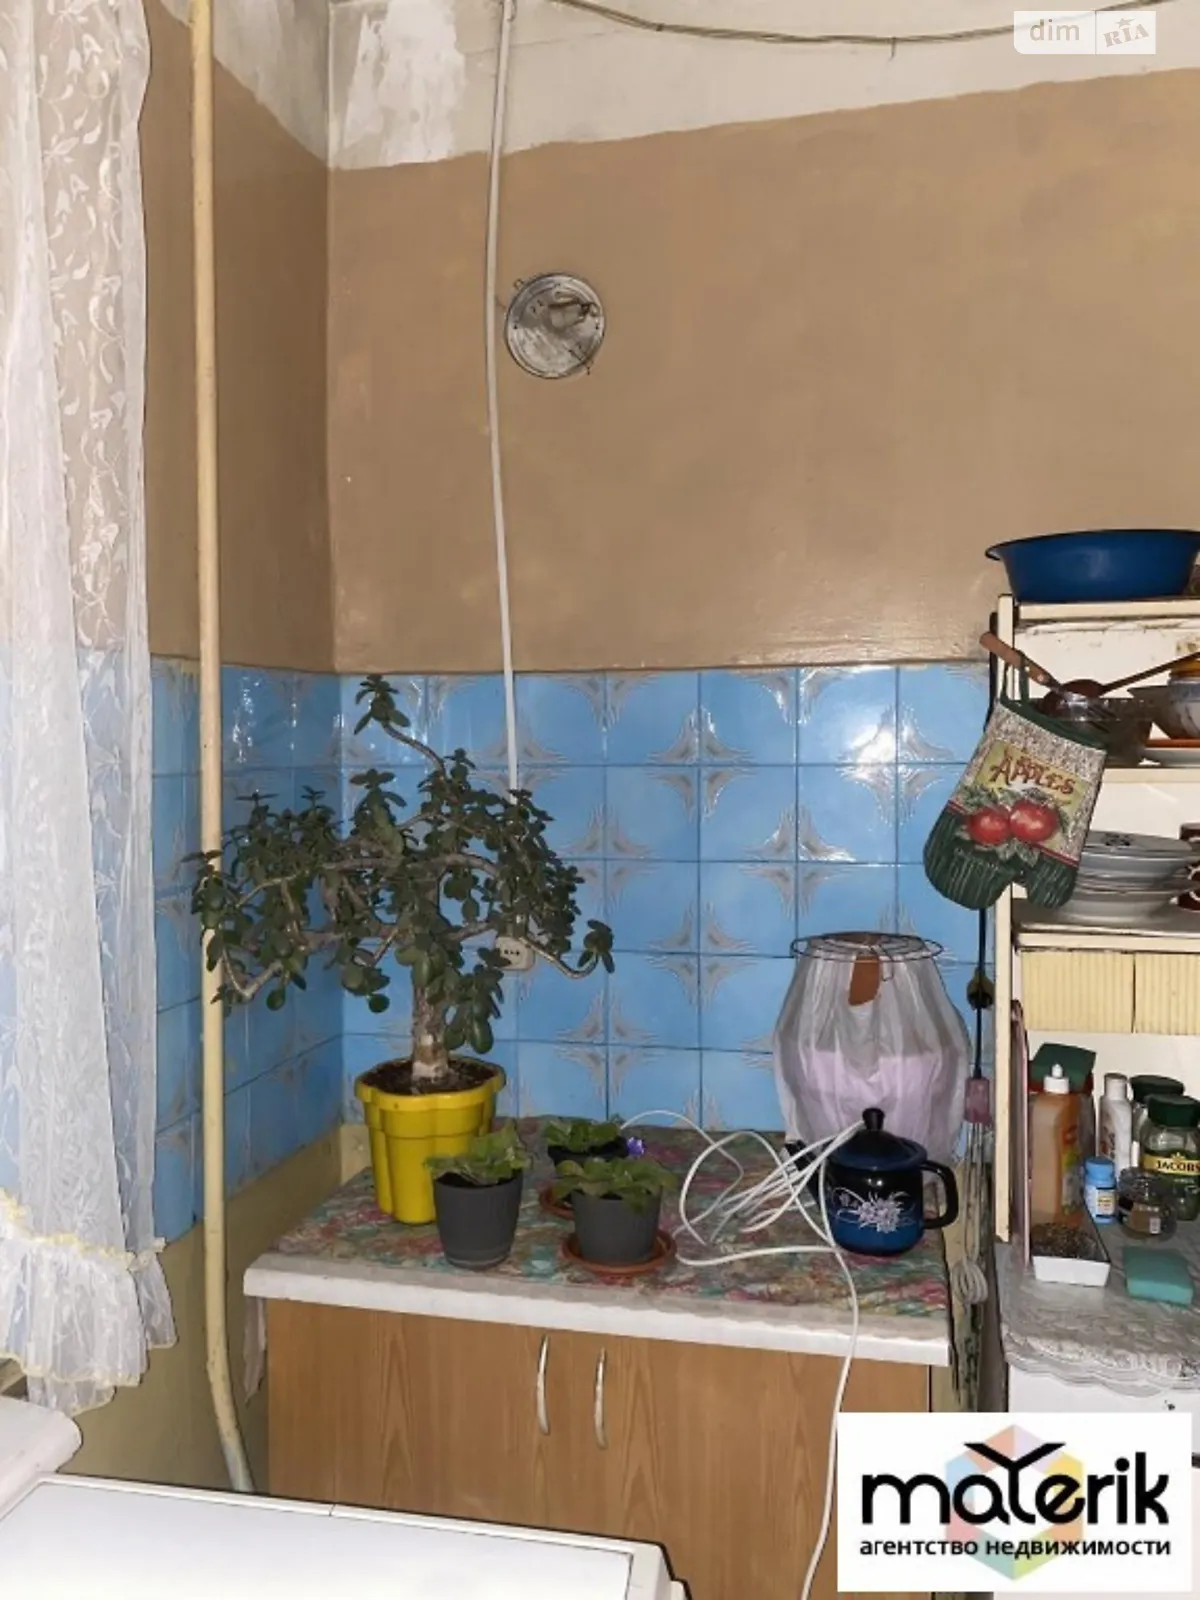 Продается комната 65 кв. м в Одессе, цена: 10000 $ - фото 1